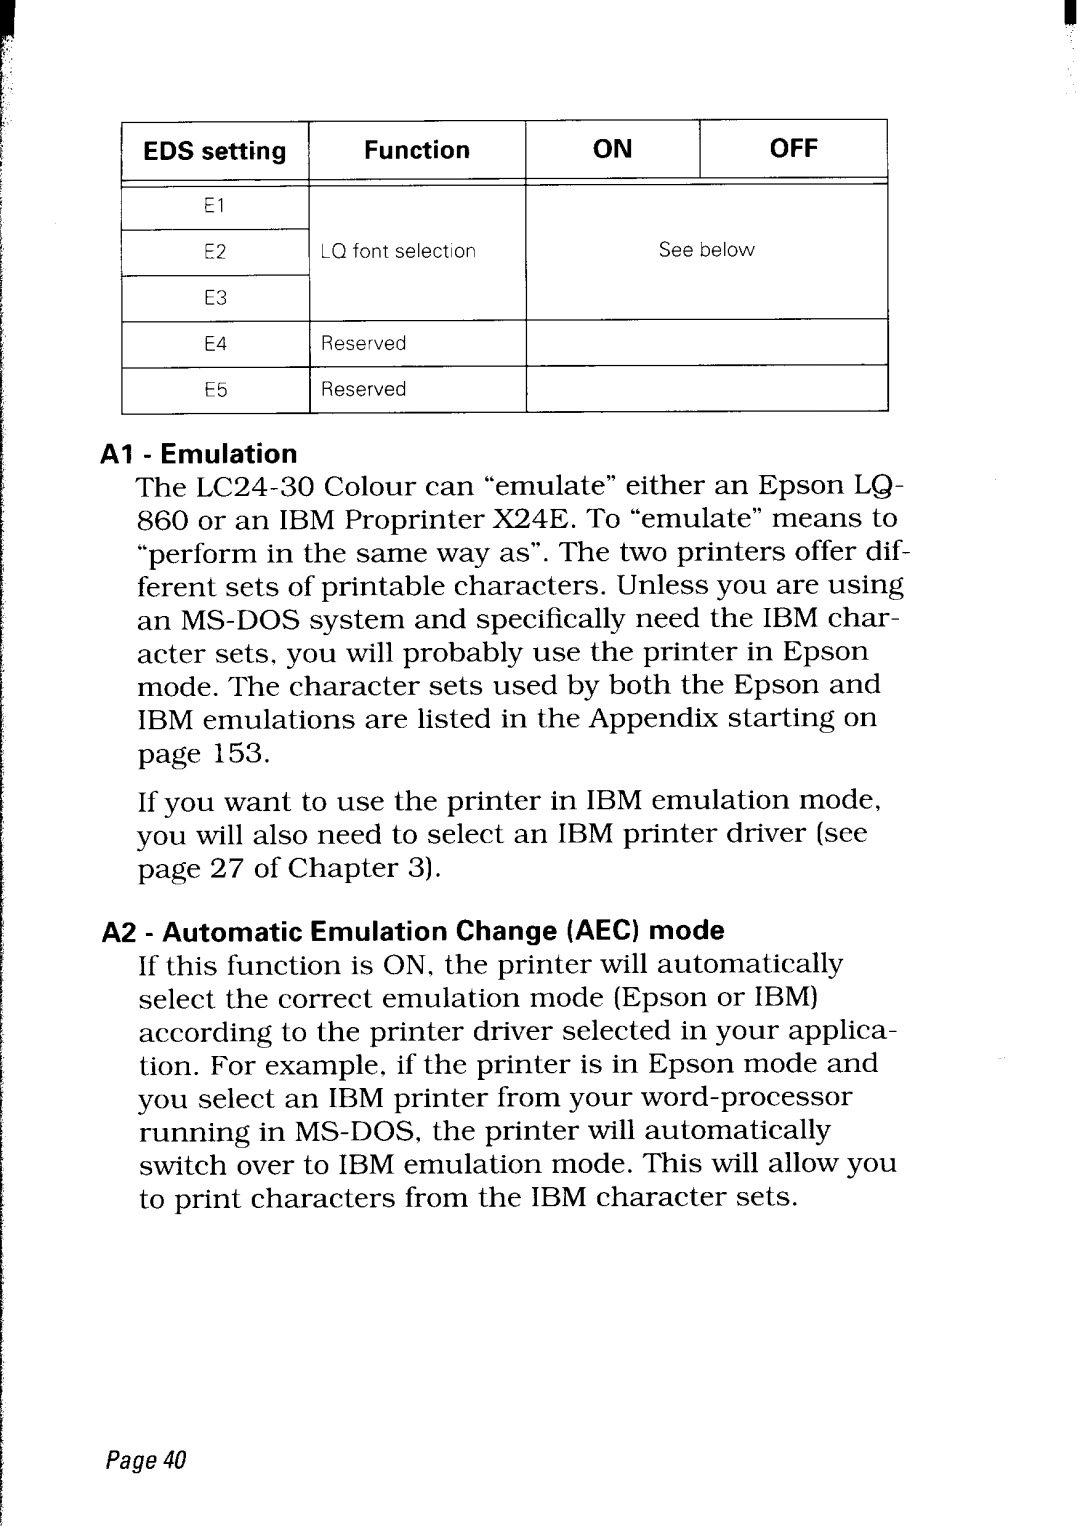 Star Micronics LC24-30 user manual 